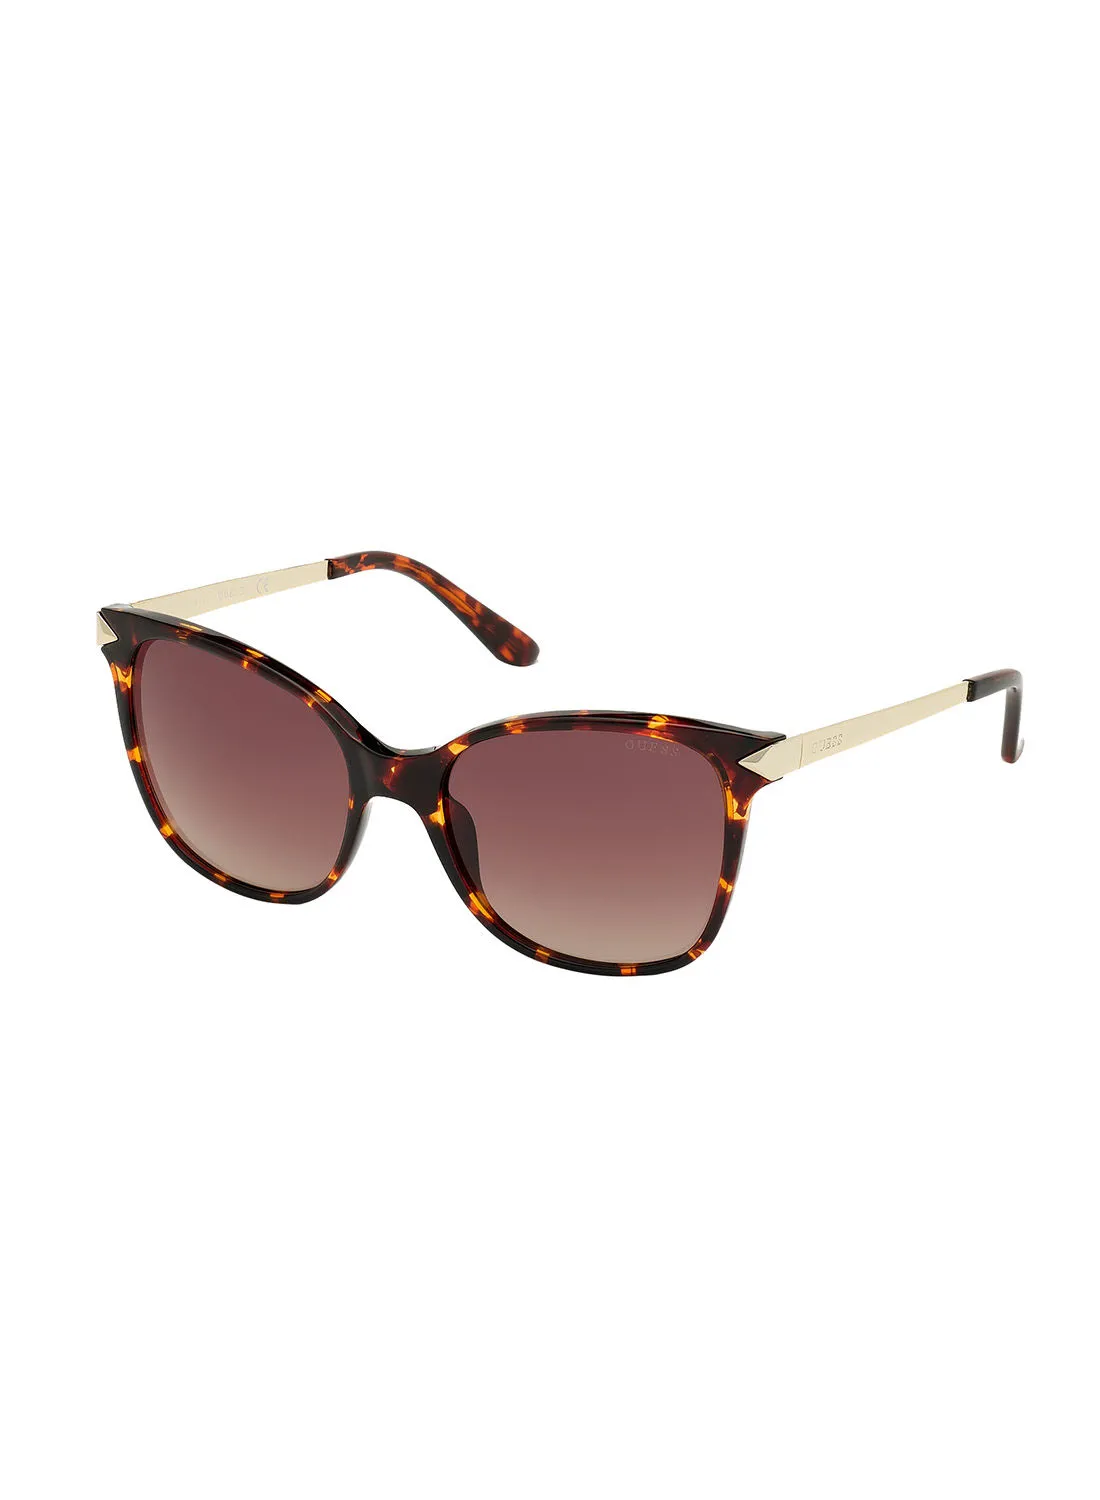 GUESS Women's Square Sunglasses - Lens Size: 56 mm